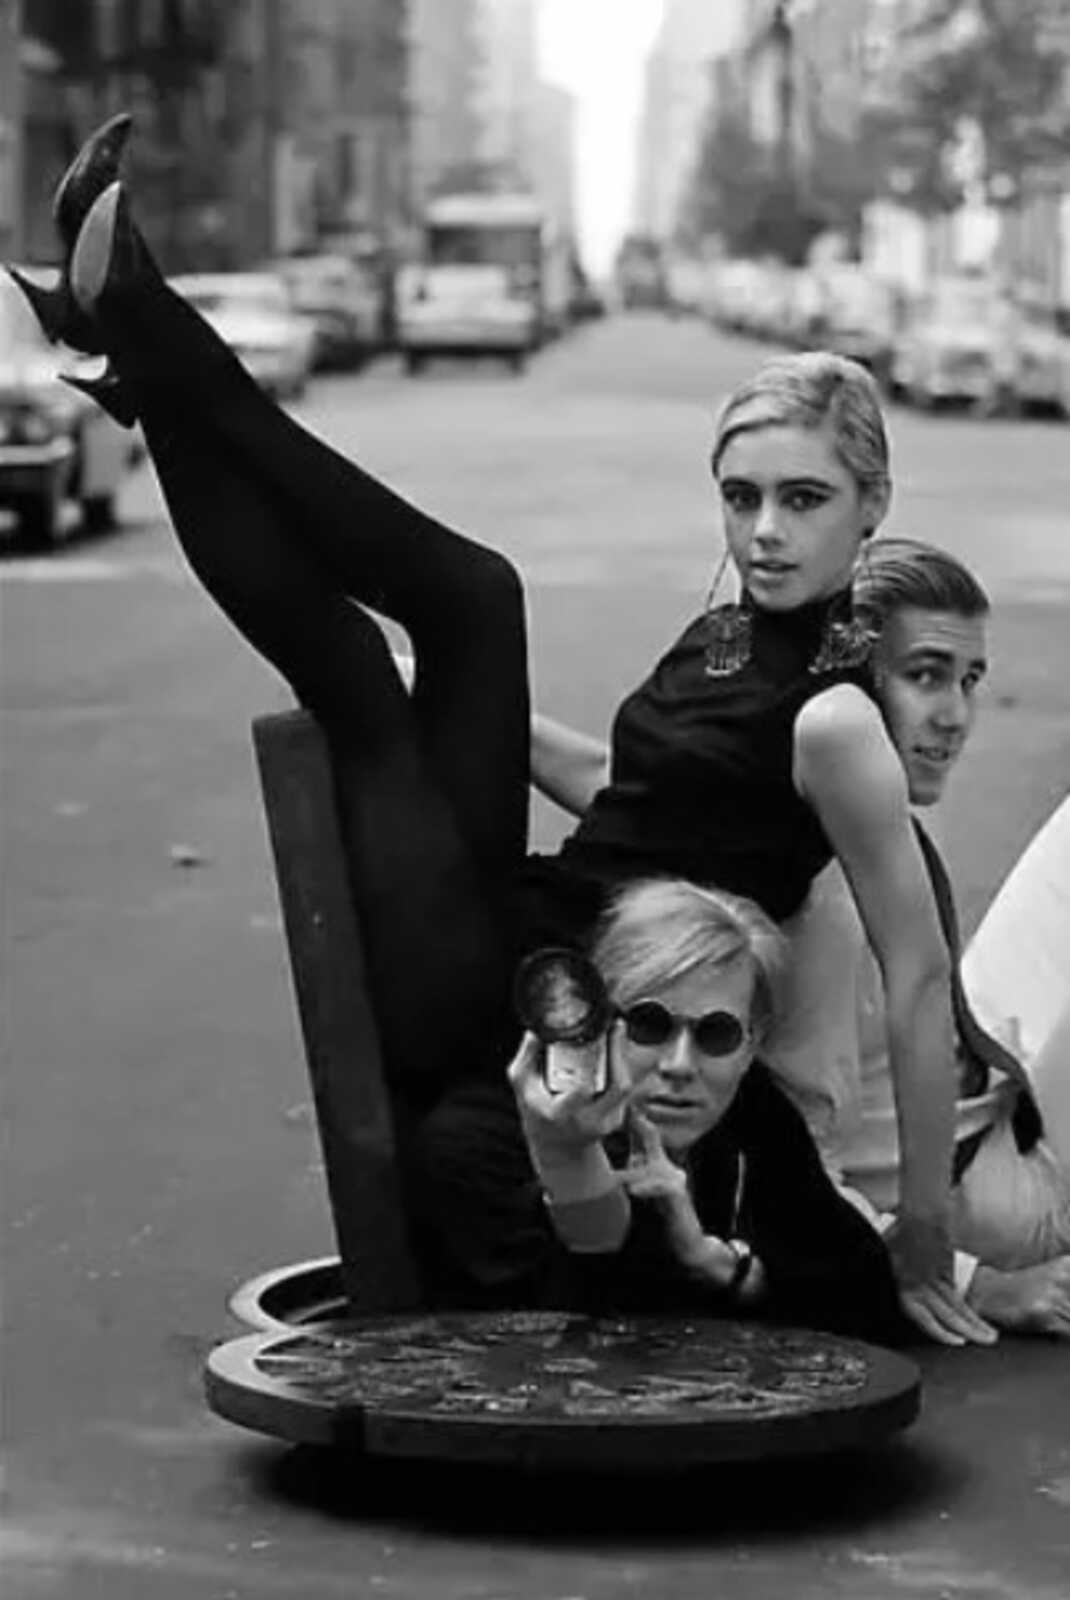 Andy Warhol with Edie Sedgwick and Chuck Wein, New York, 1965 Burt Glinn